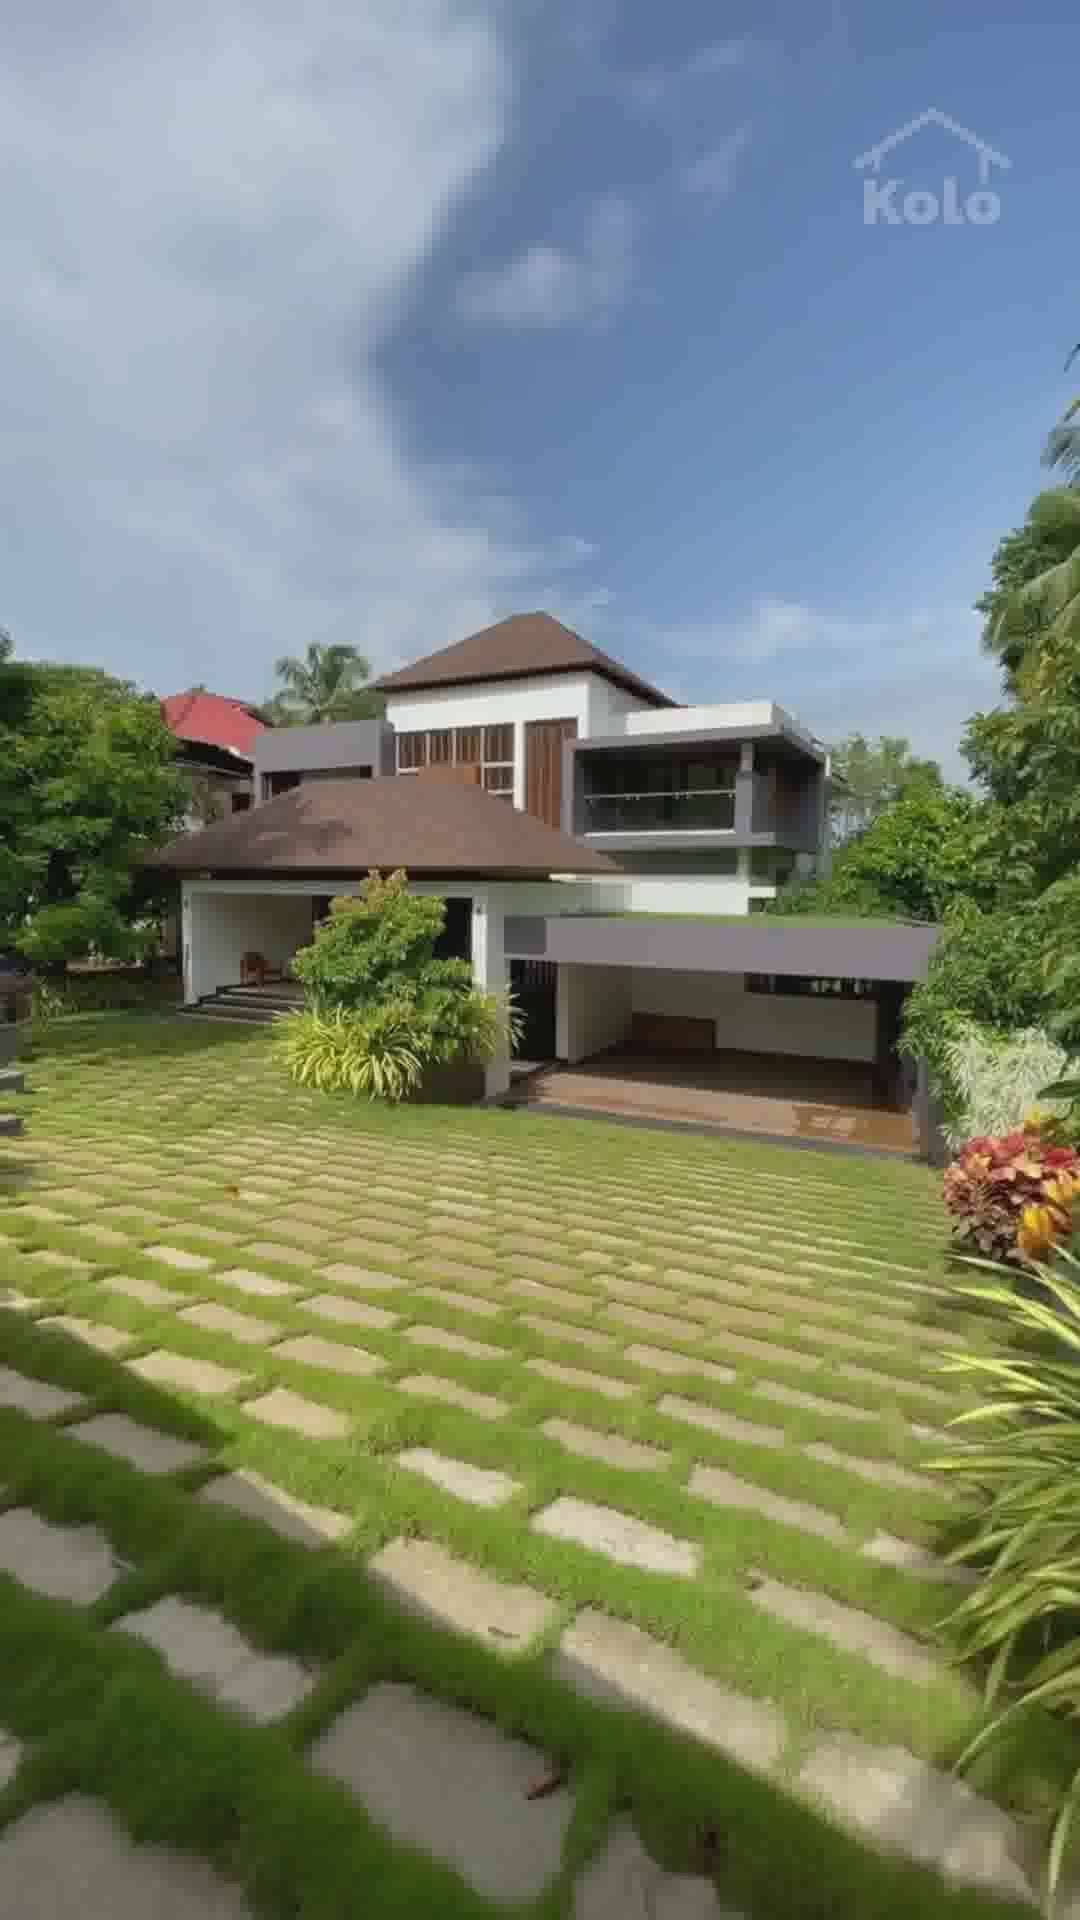 SUKOON
residence for Jaseem Raseena and family at Padinjarangadi, Palakkad

Architect Firm: VIEWPOINT DEZIGNS
Design team:
Shyam Raj Chandroth @ar.shyamraj
@amal_raj_chandroth
@siyad_sidhik

Client: Jaseem, Raseen
@jaseemmohamedc
@raseenajaseem
Location: Padinjarangadi, Palakkad

Kolo - India’s Largest Home Construction Community :house:

#keralavibes #tharavad #home #huilekerehouseproject #traditionaldesign #kerala #koloapp #keralagram #reelitfeelit #keralagodsowncountry #homedecor #homedesign #keralahomedesignz #keralavibes #instagood #interiordesign #interior #interiordesigner #homedecoration #homedesignideas #keralahomes #homedecor #homes #traditional #kerala #homesweethome #architecturedesign #architecture #keralaarchitecture